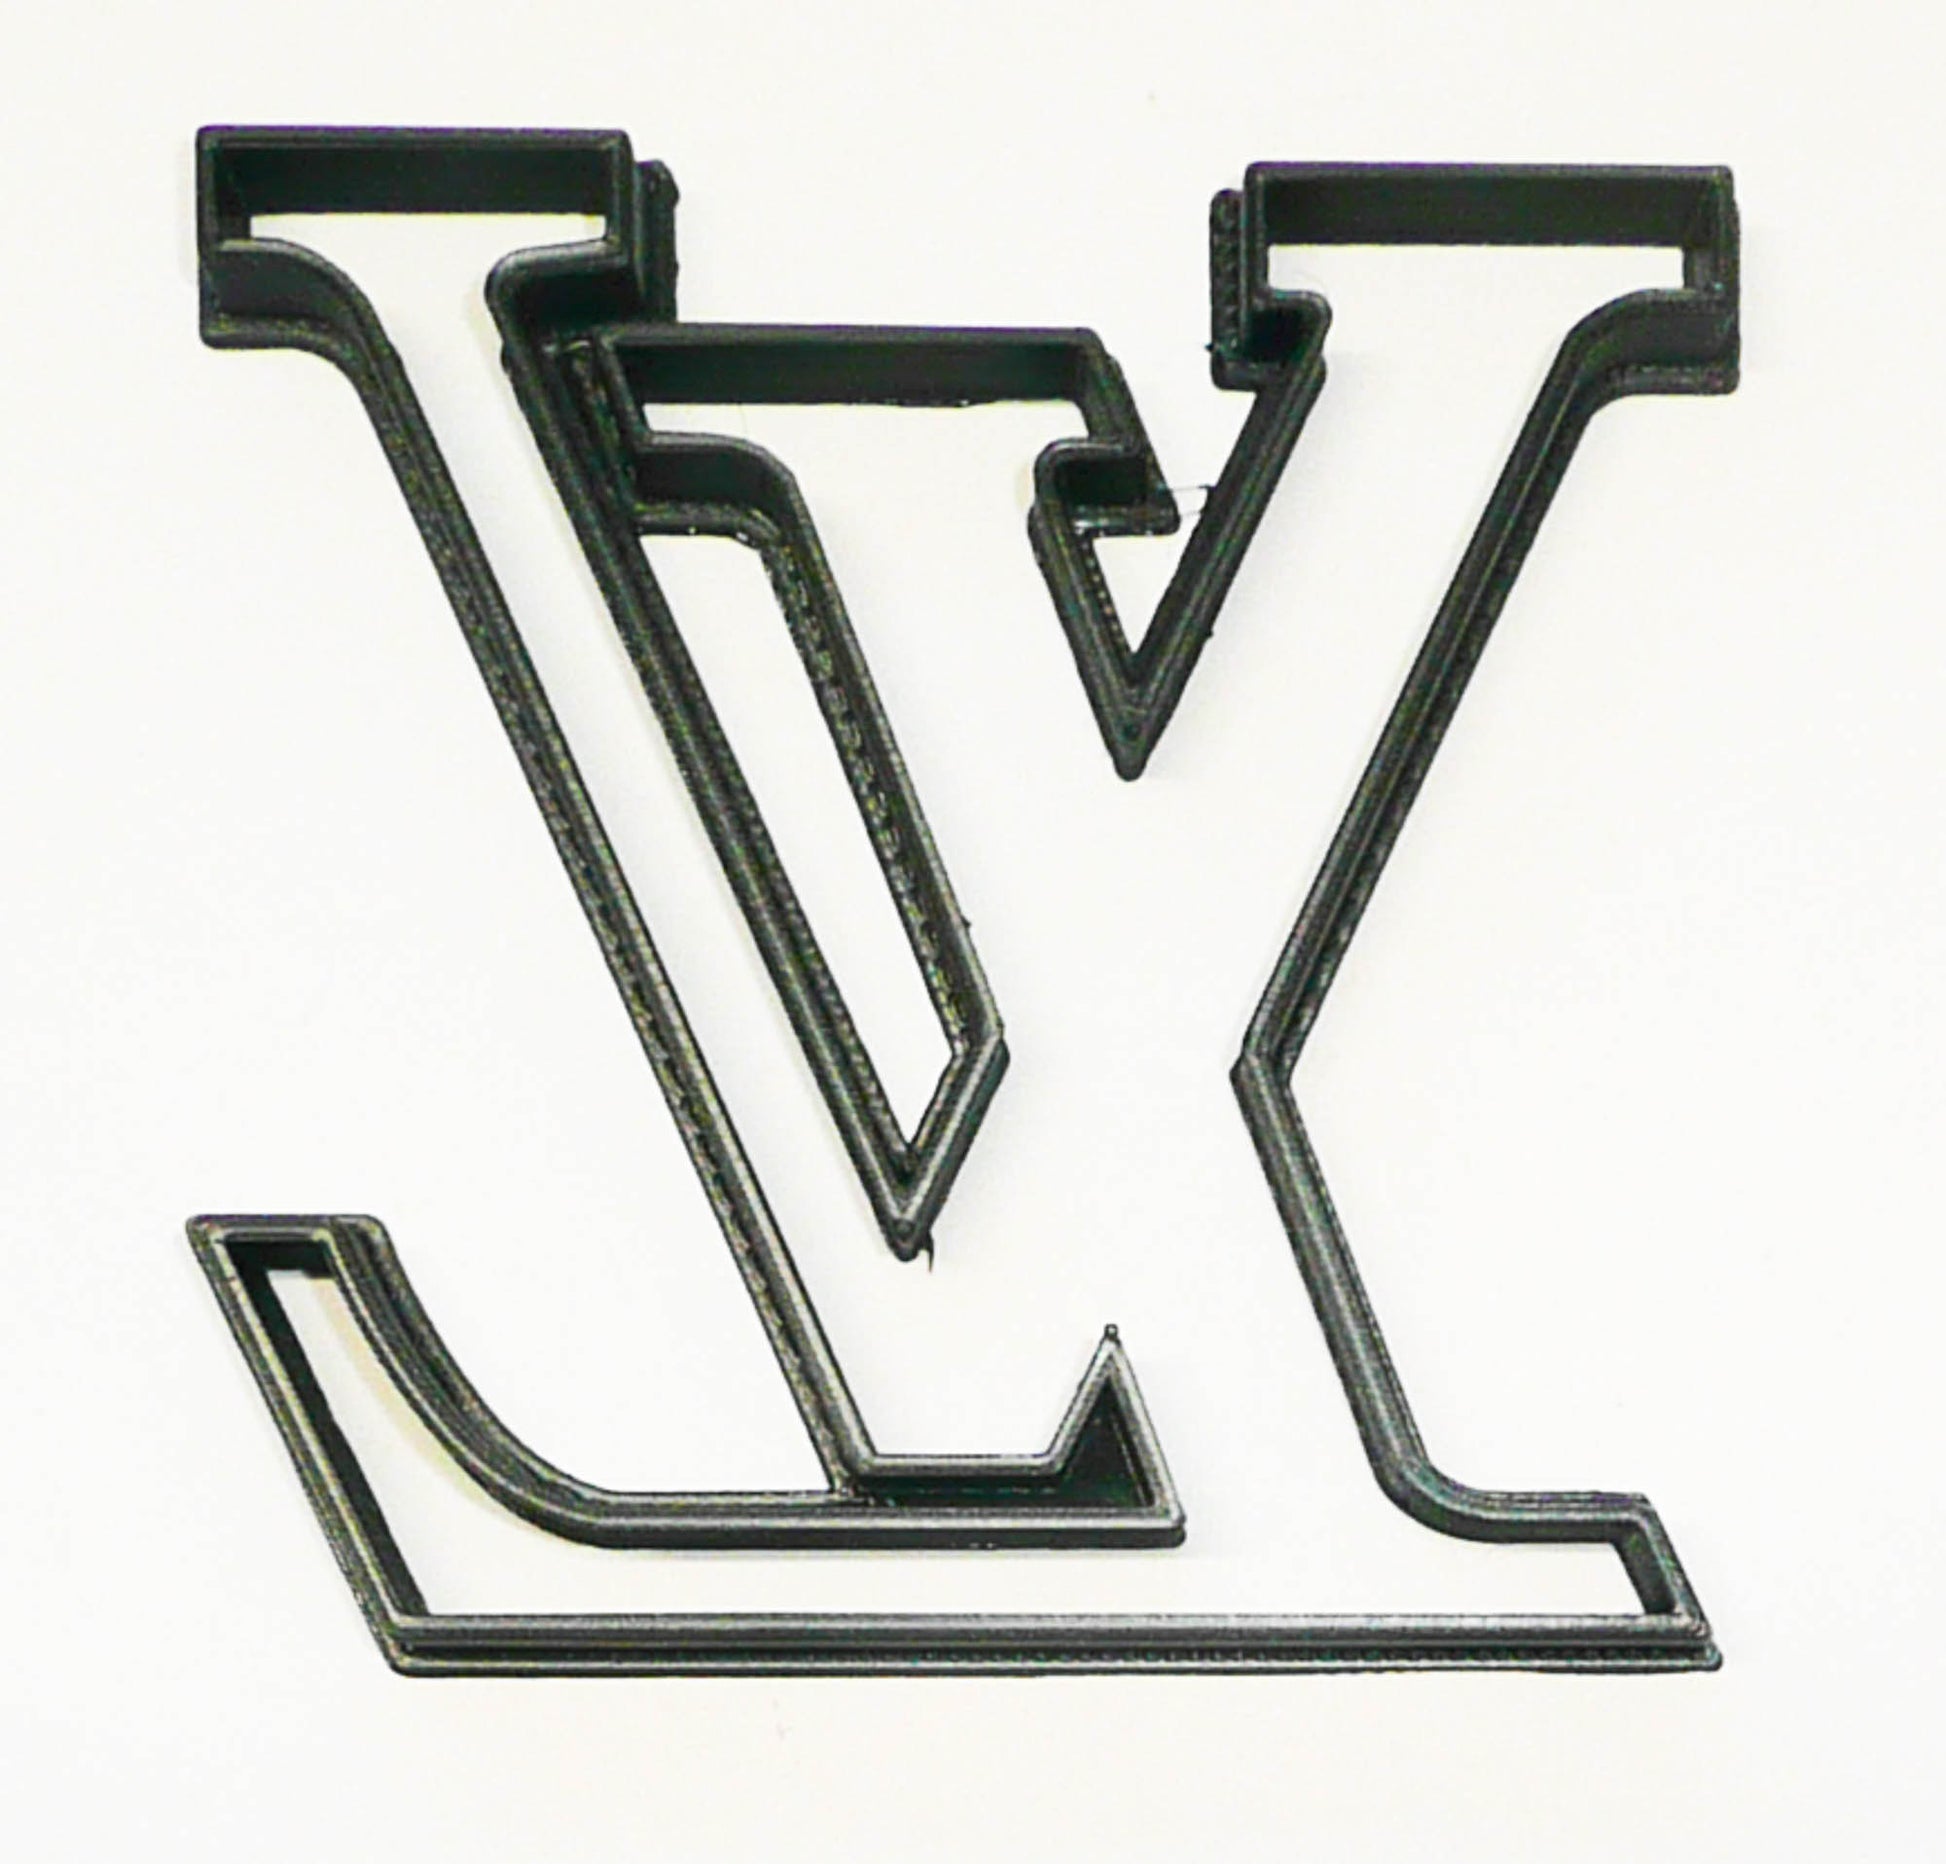 Lv Logo With Symbols